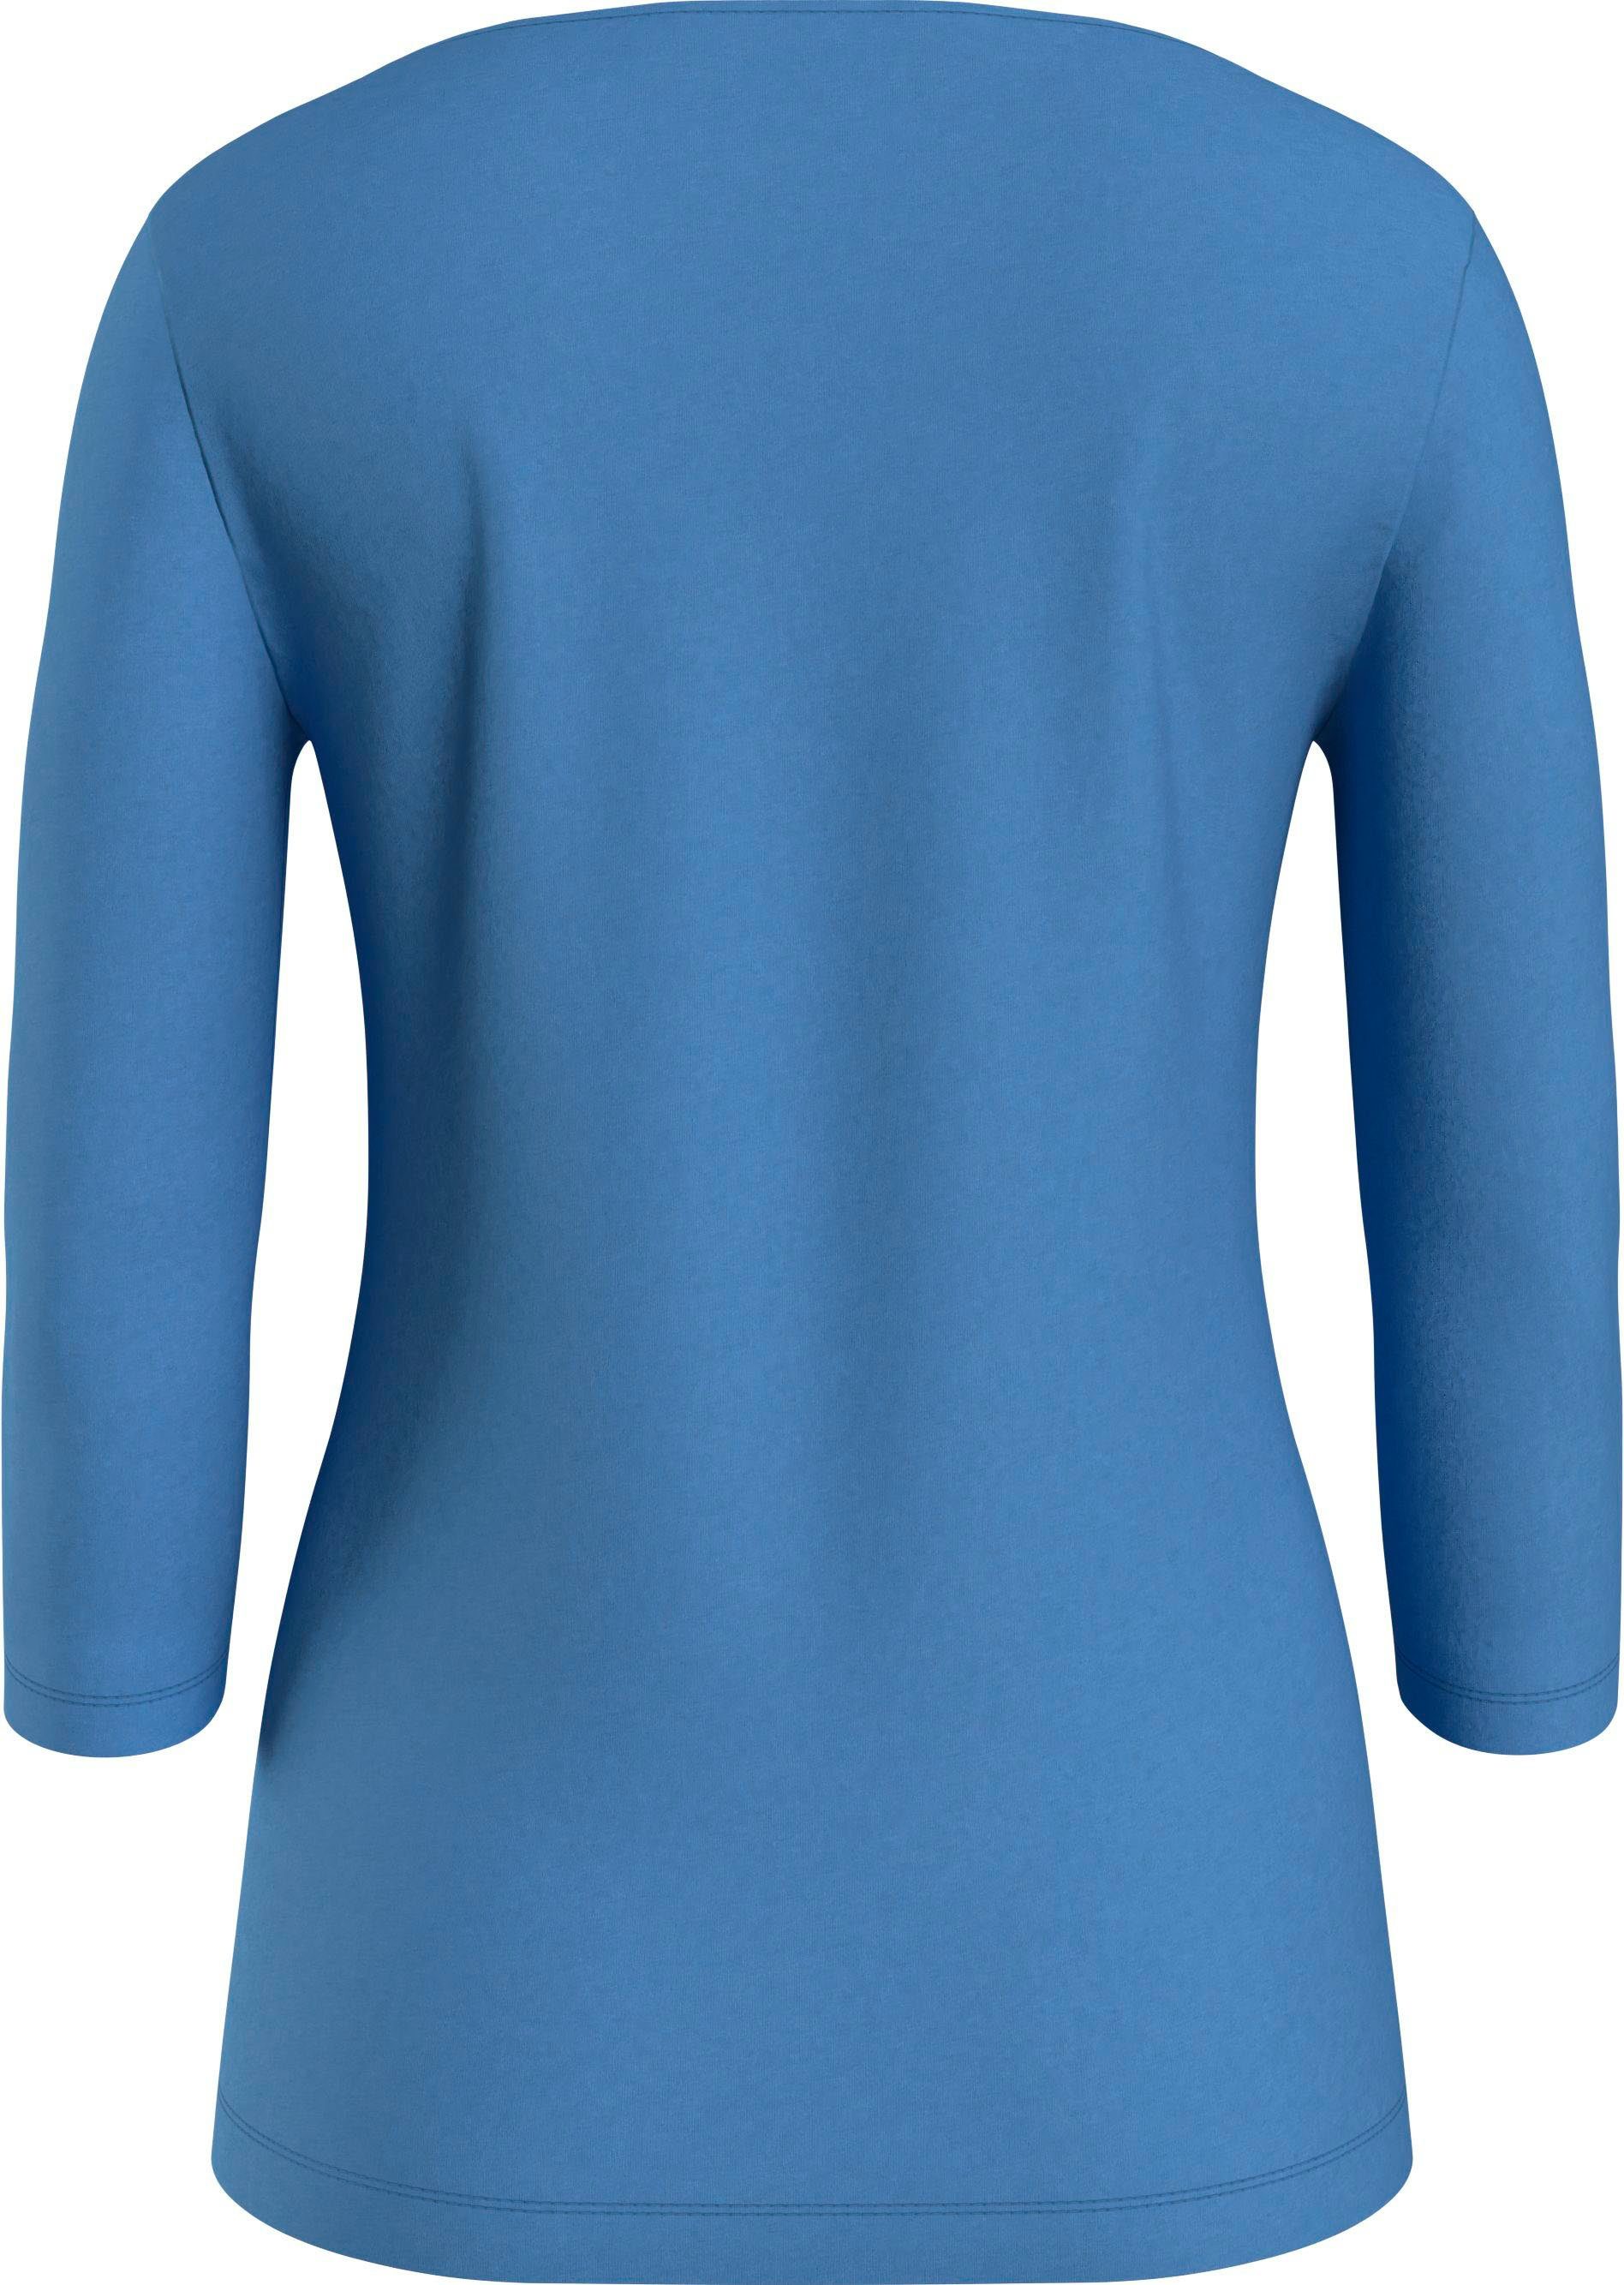 Tommy-Hilfiger-Logostickerei TOP CO 3/4 ORG Tommy 3/4-Arm-Shirt SLV blau BOAT-NK Hilfiger SLIM mit